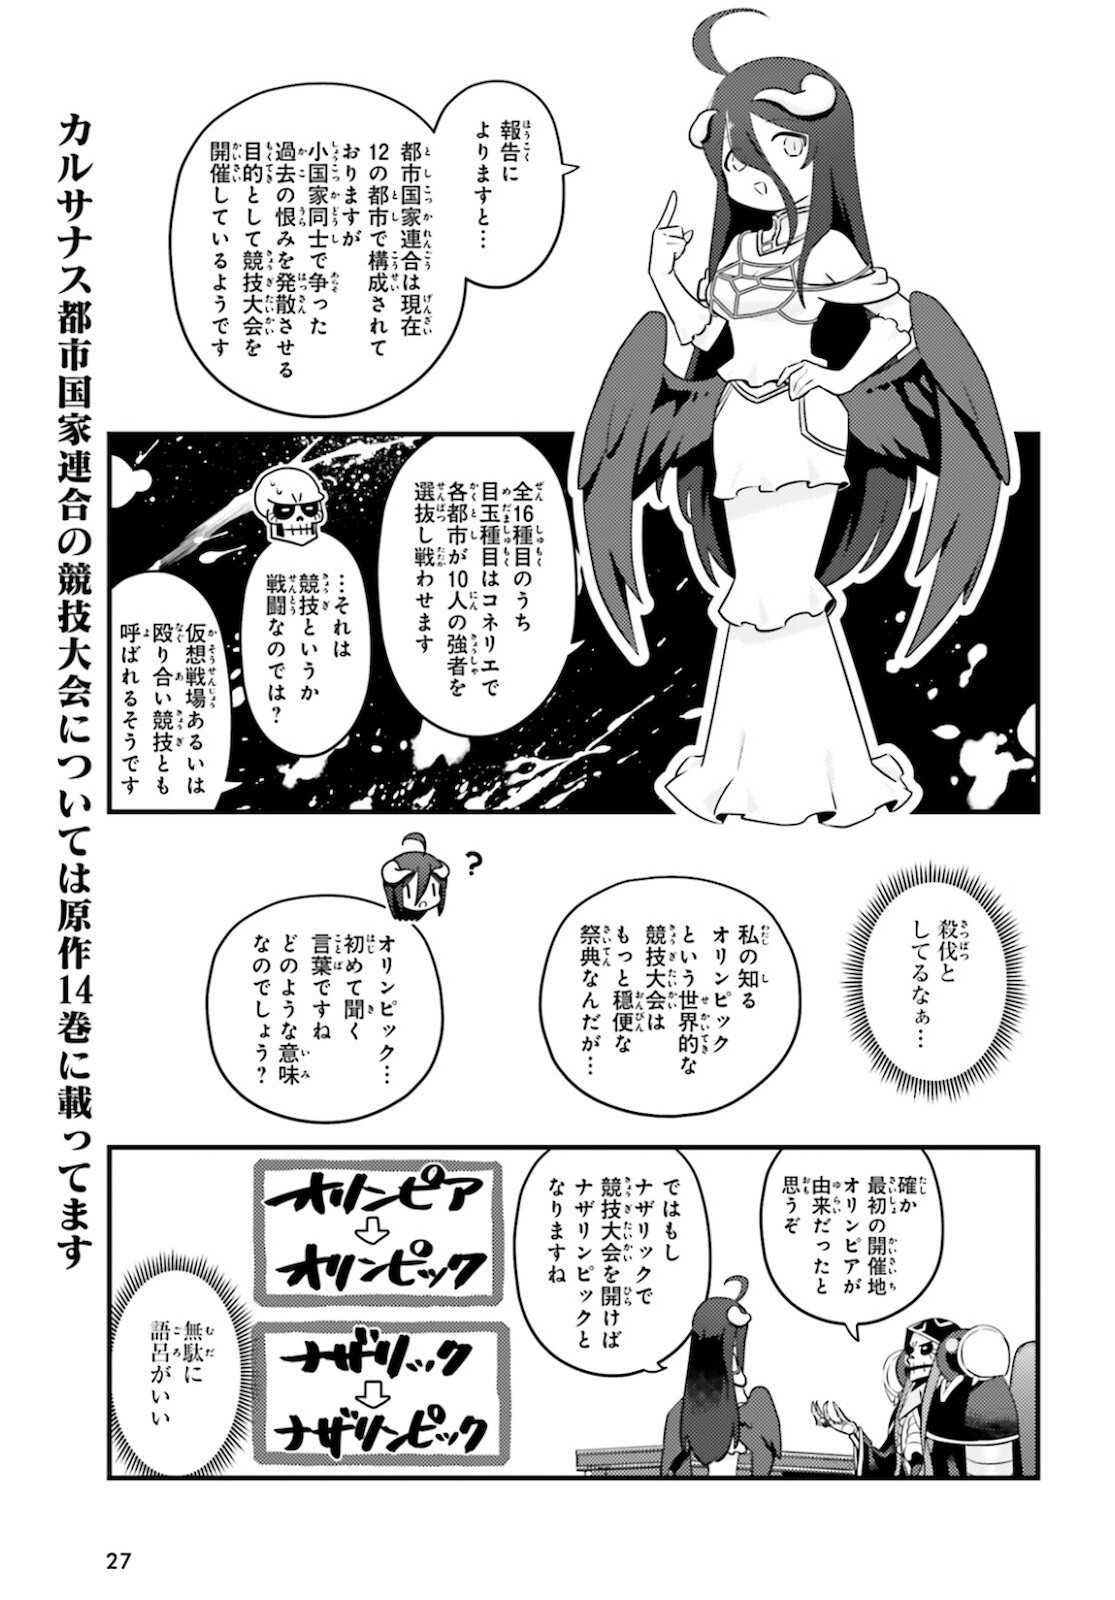 Overlord-Fushisha-no-Oh - Chapter 50 - Page 3